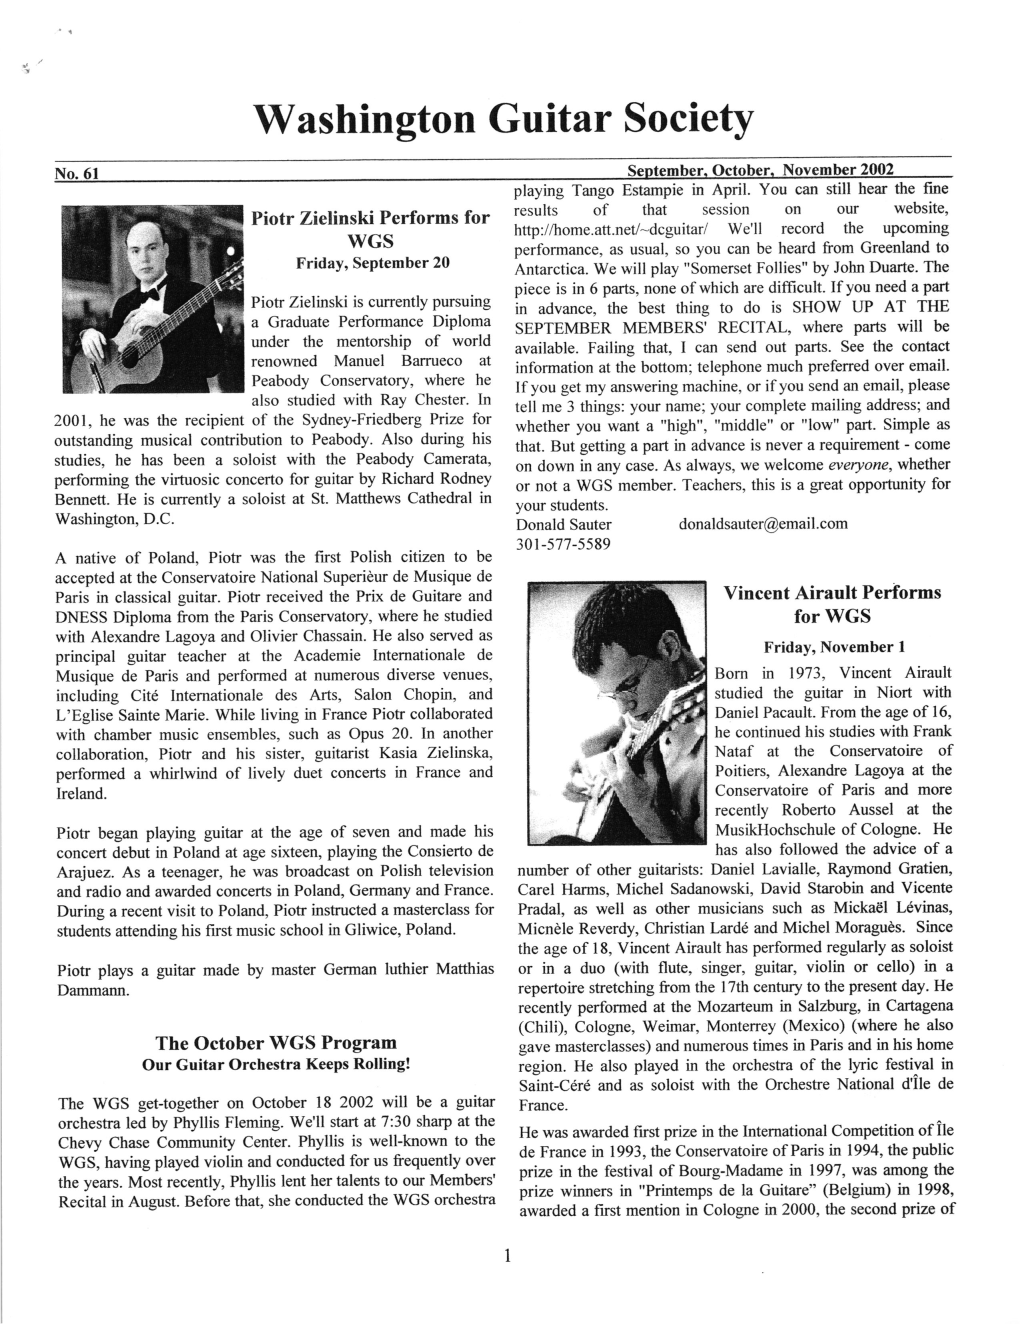 Washington Guitar Society Newsletter No. 61